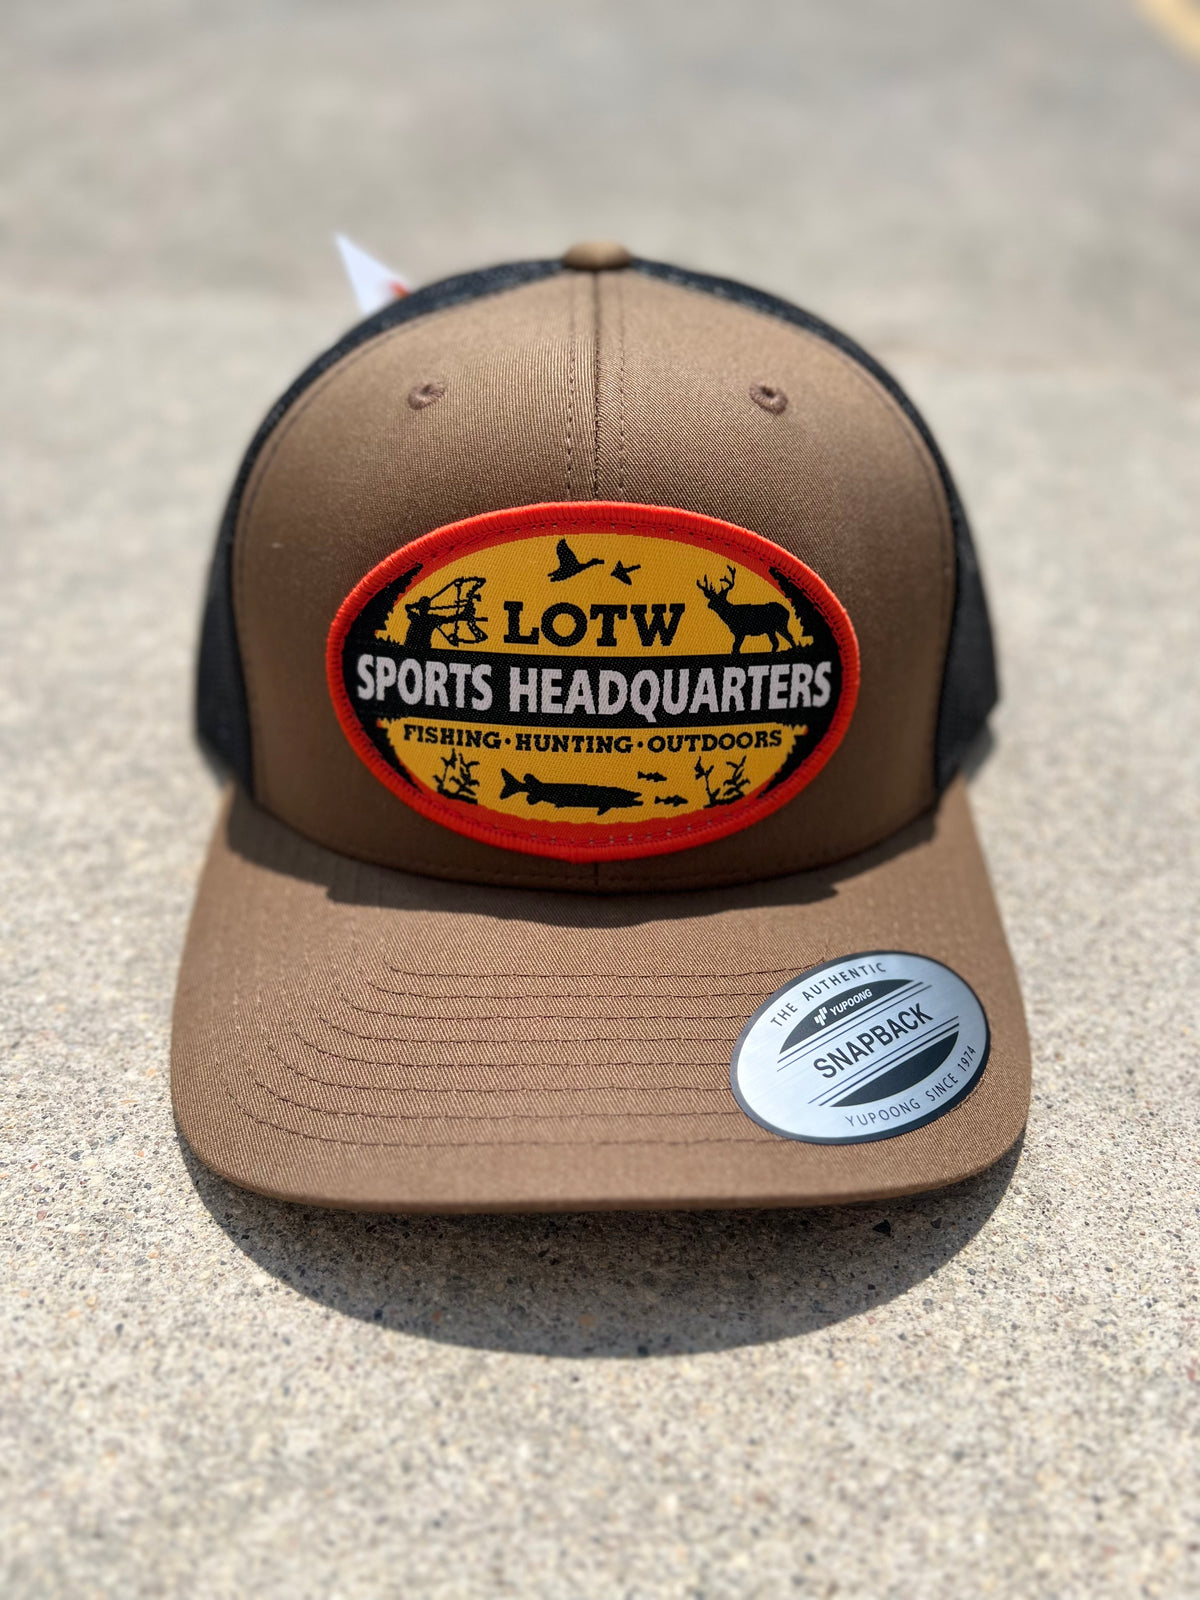 LOTW Sports Headquarters Retro Snapback Trucker Hats